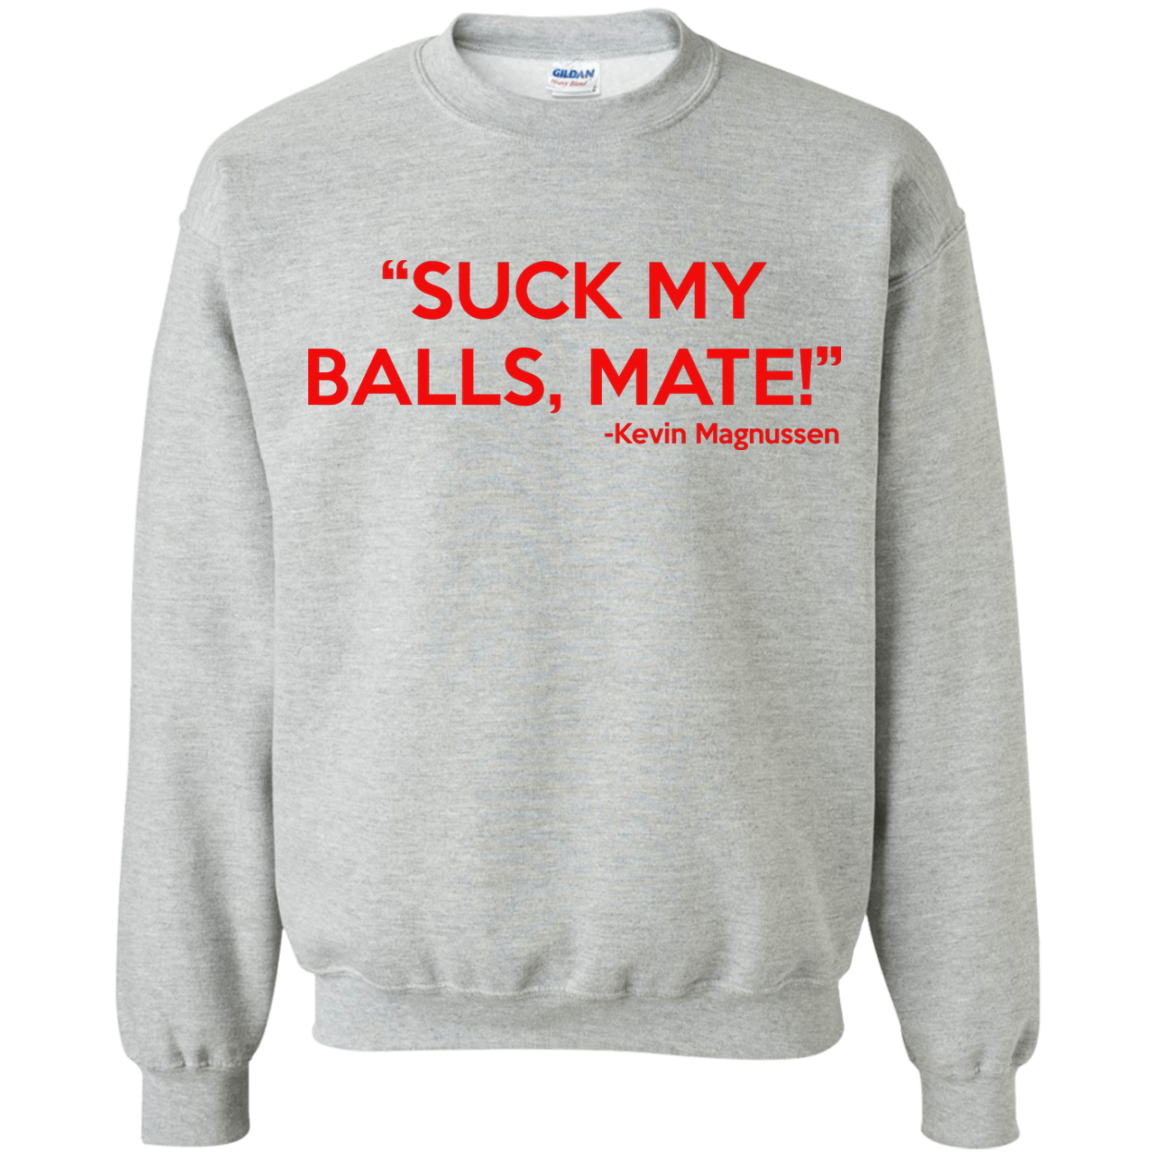 Kevin Magnussen - Suck my mate t-shirts, hoodies,